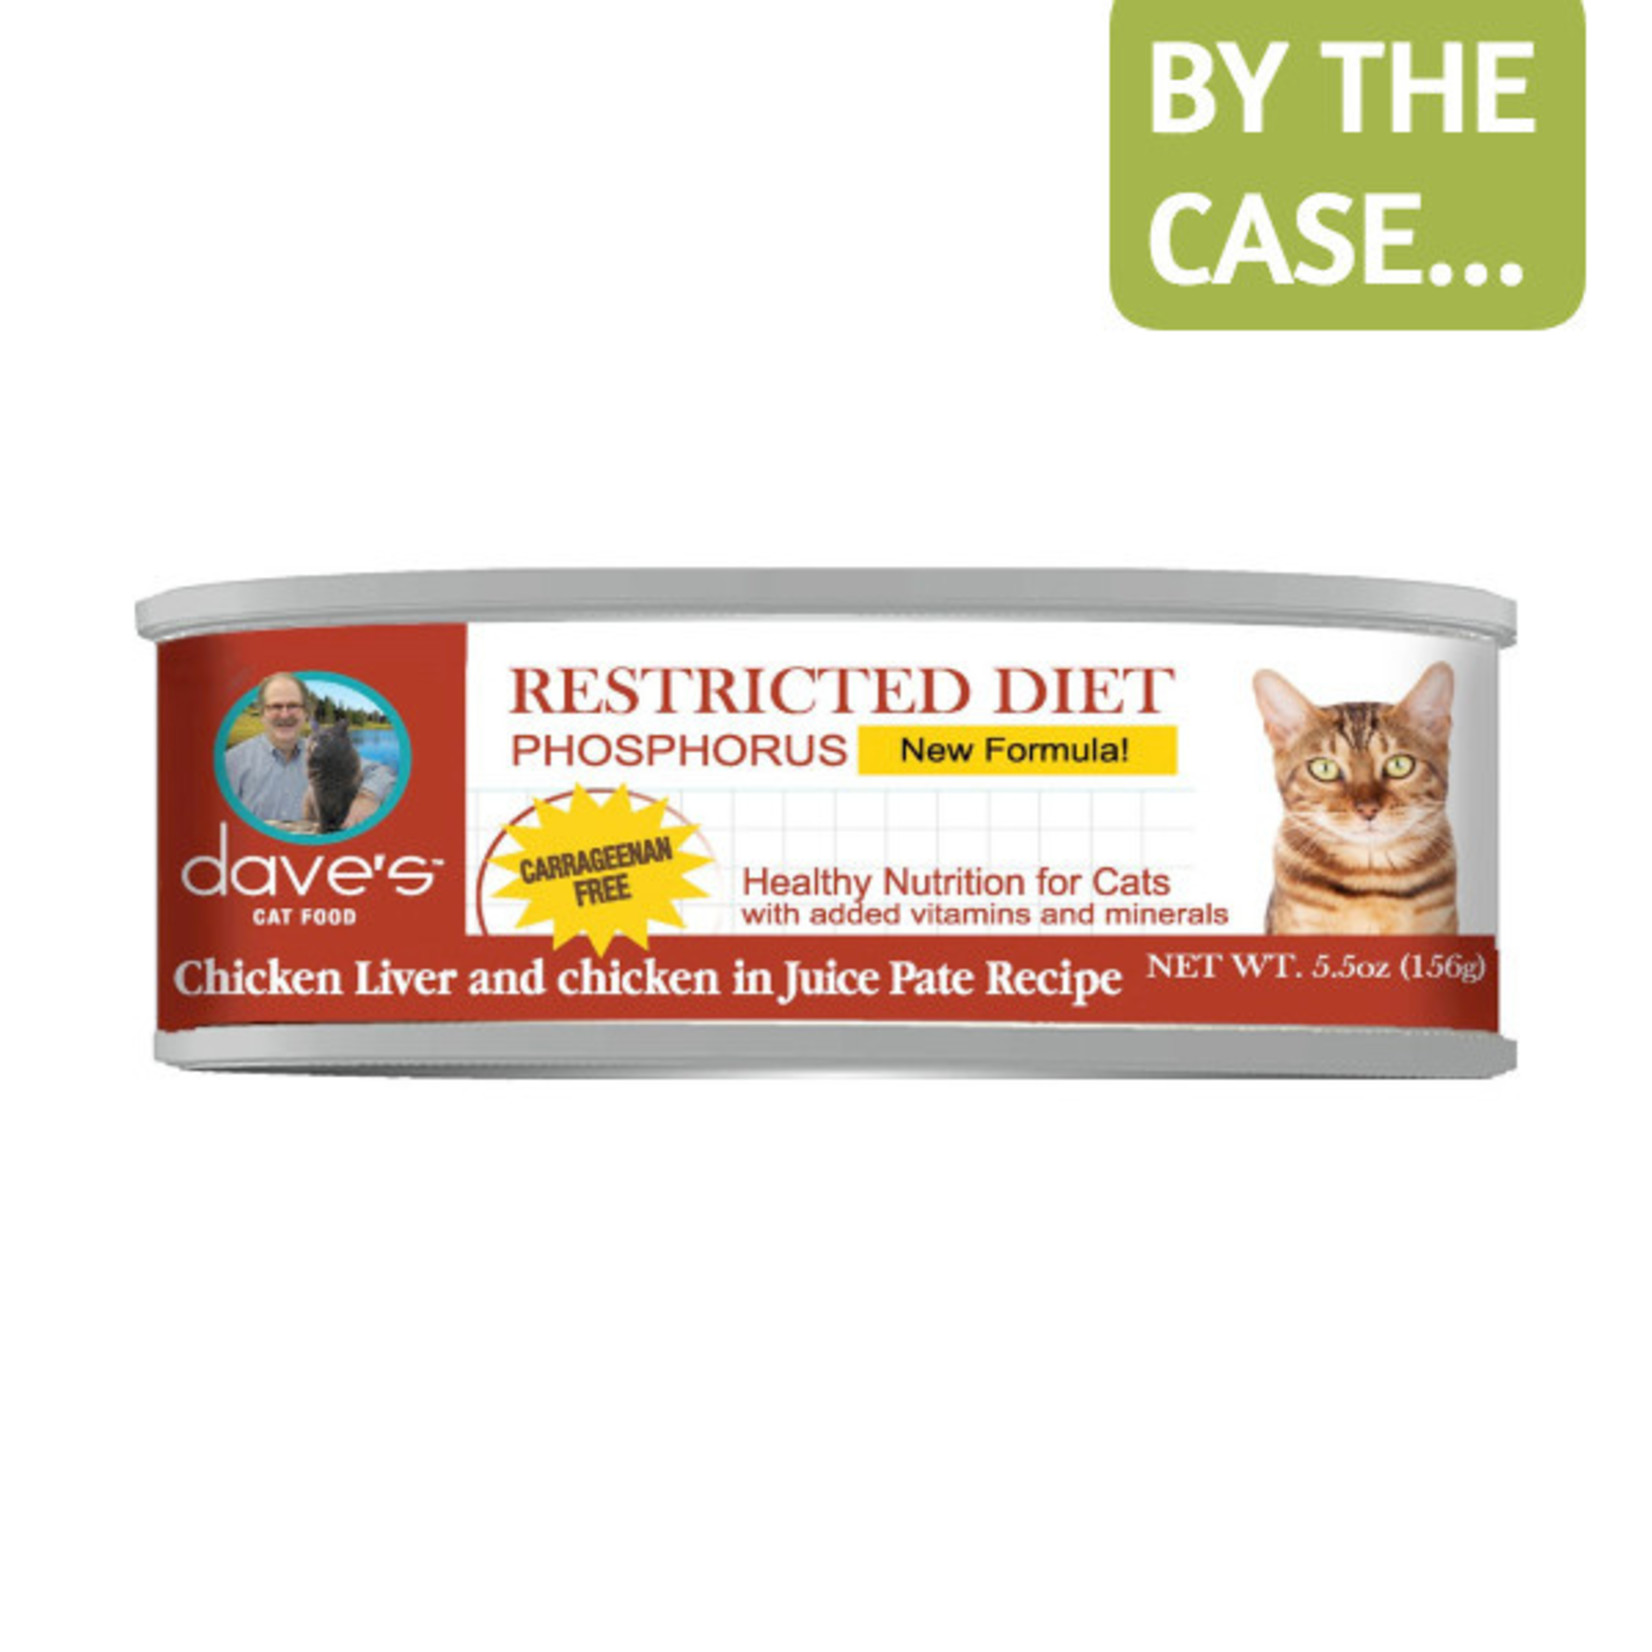 Daves Pet Food Dave's Wet Cat Food Restricted Diet Phosphorus Chicken Liver & Chicken in Juice Pate Recipe 5.5oz